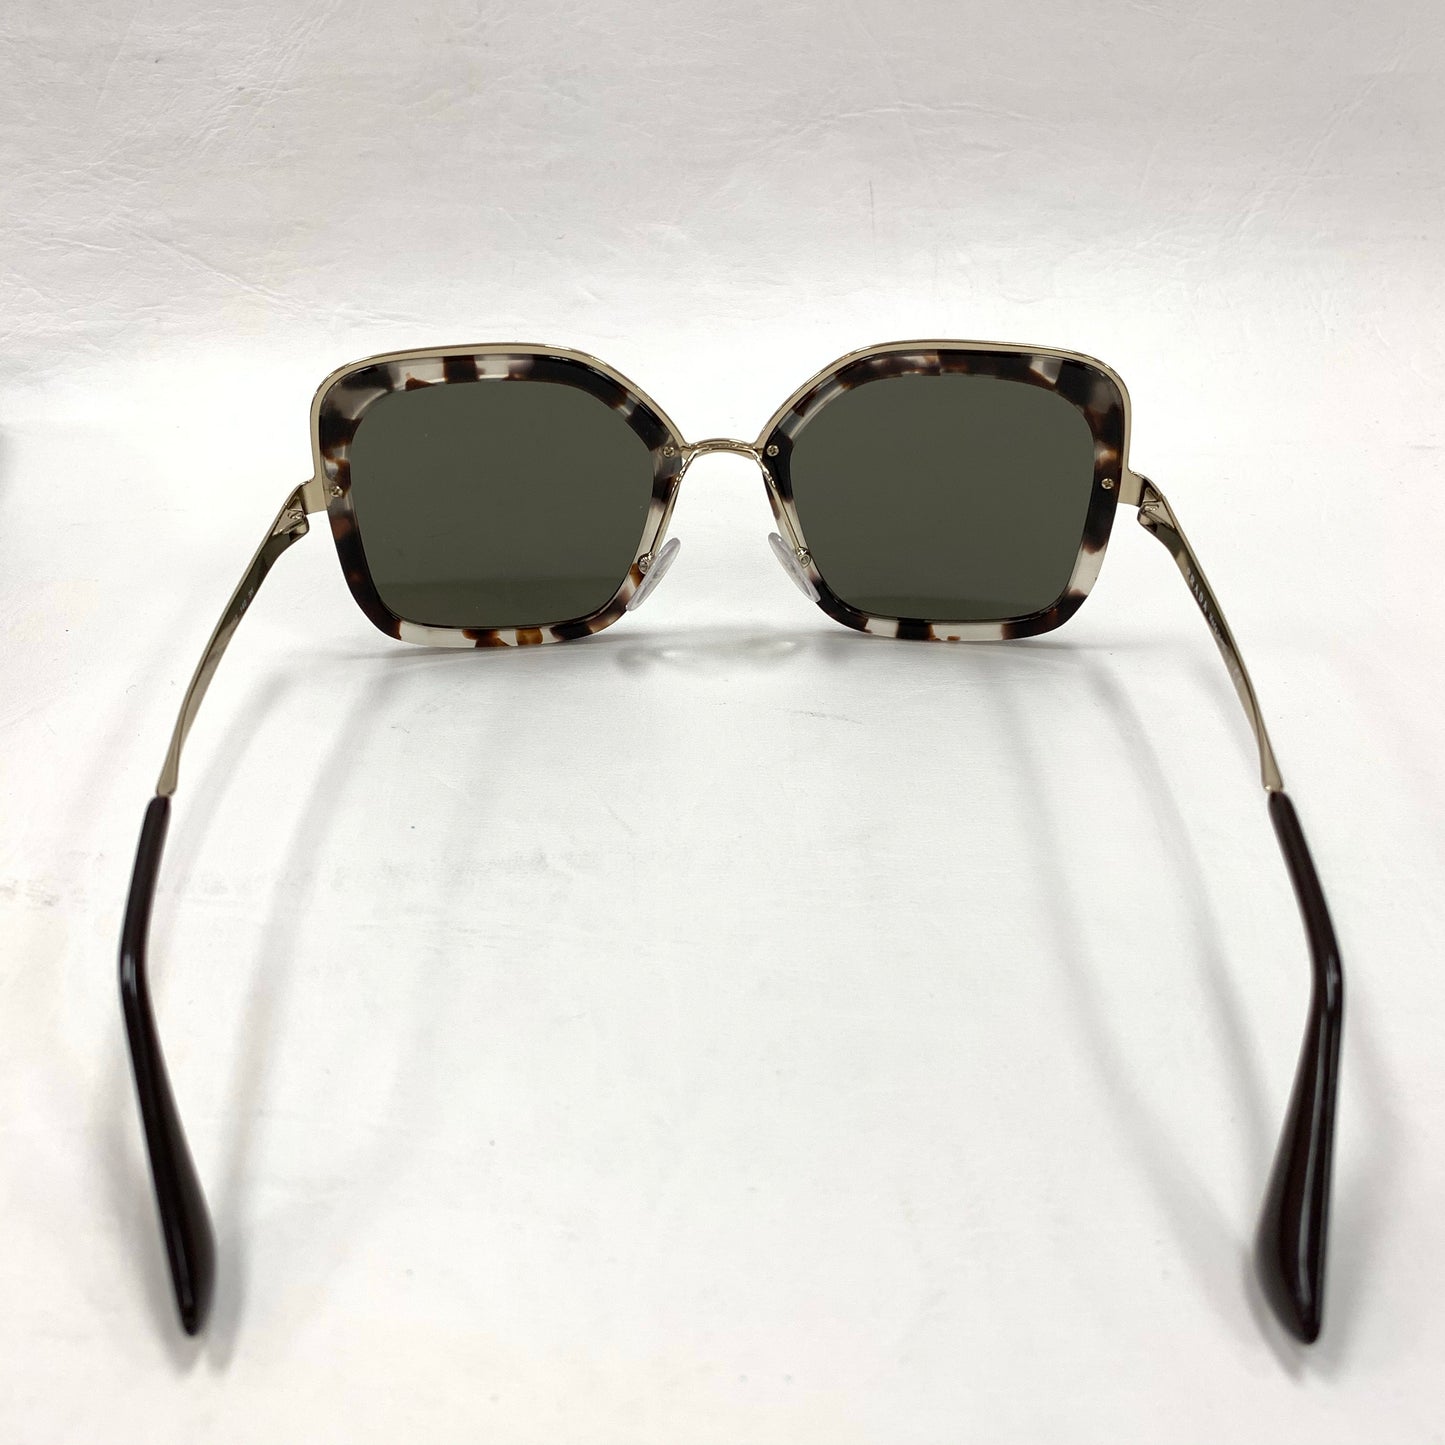 Authentic Prada Tortoise Shell Sunglasses SPR 57U